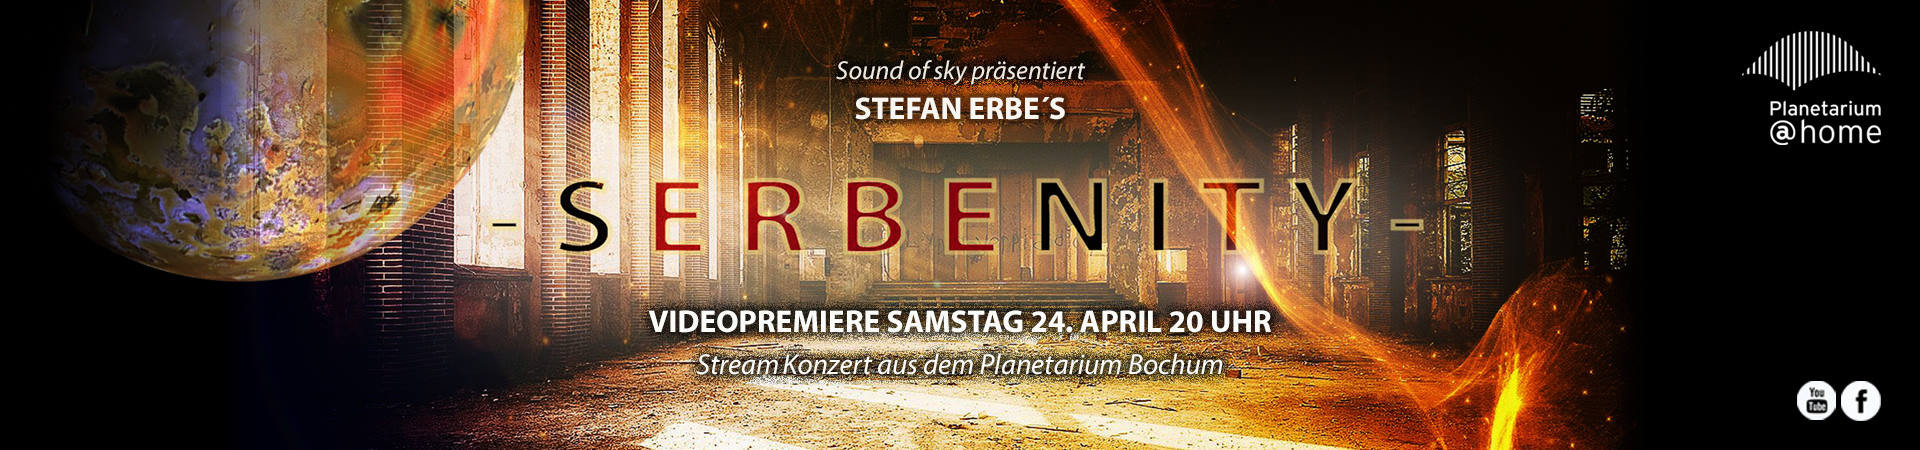 Stefan Erbe - Serbenity_header